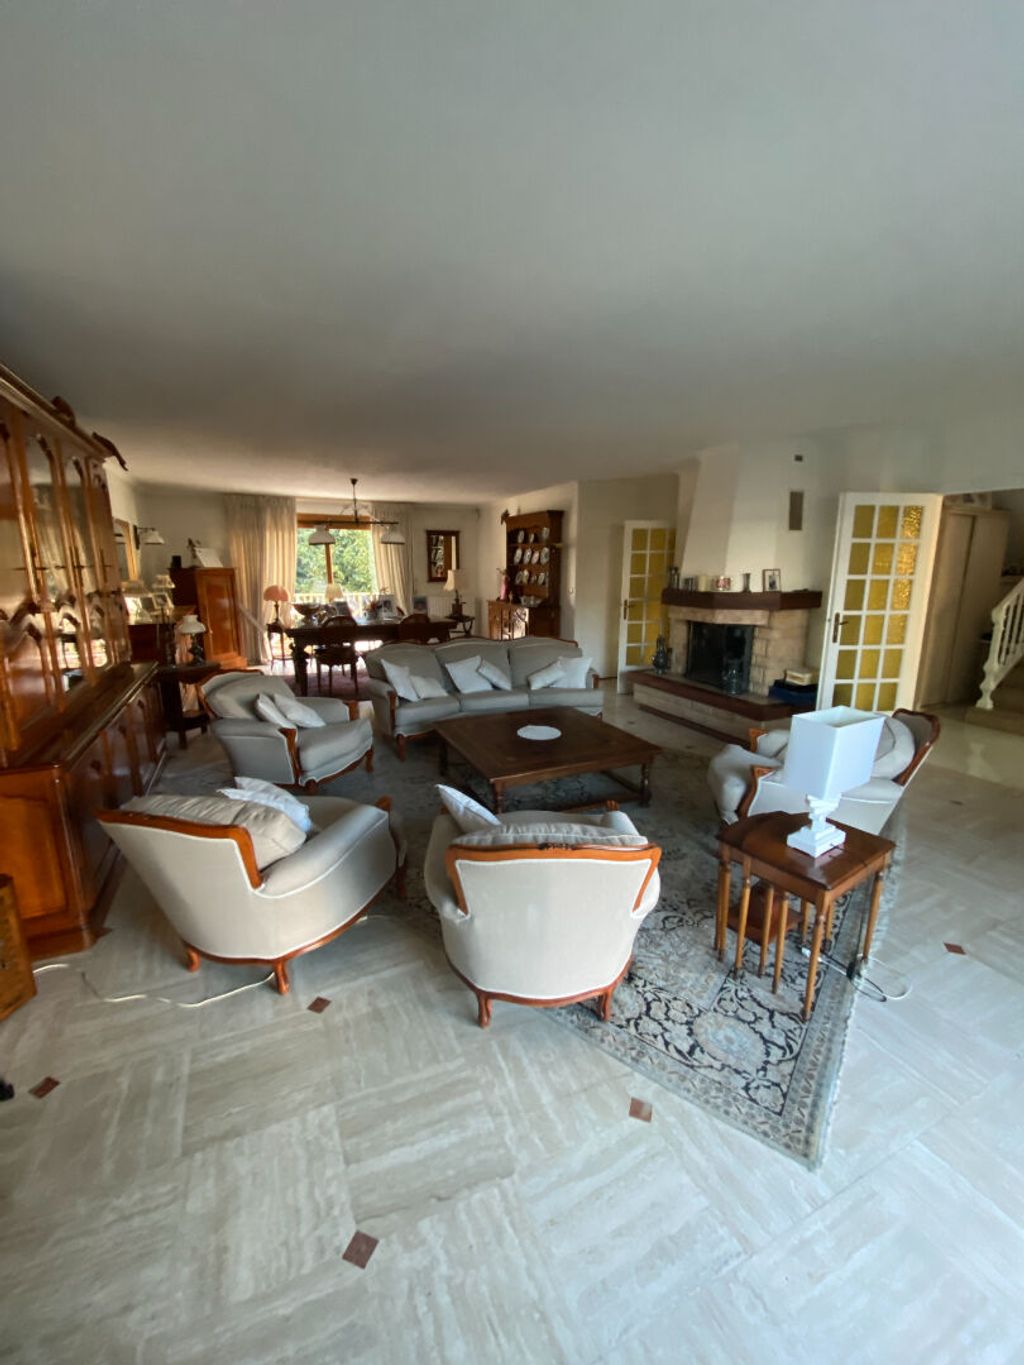 Achat maison à vendre 4 chambres 160 m² - Bobigny